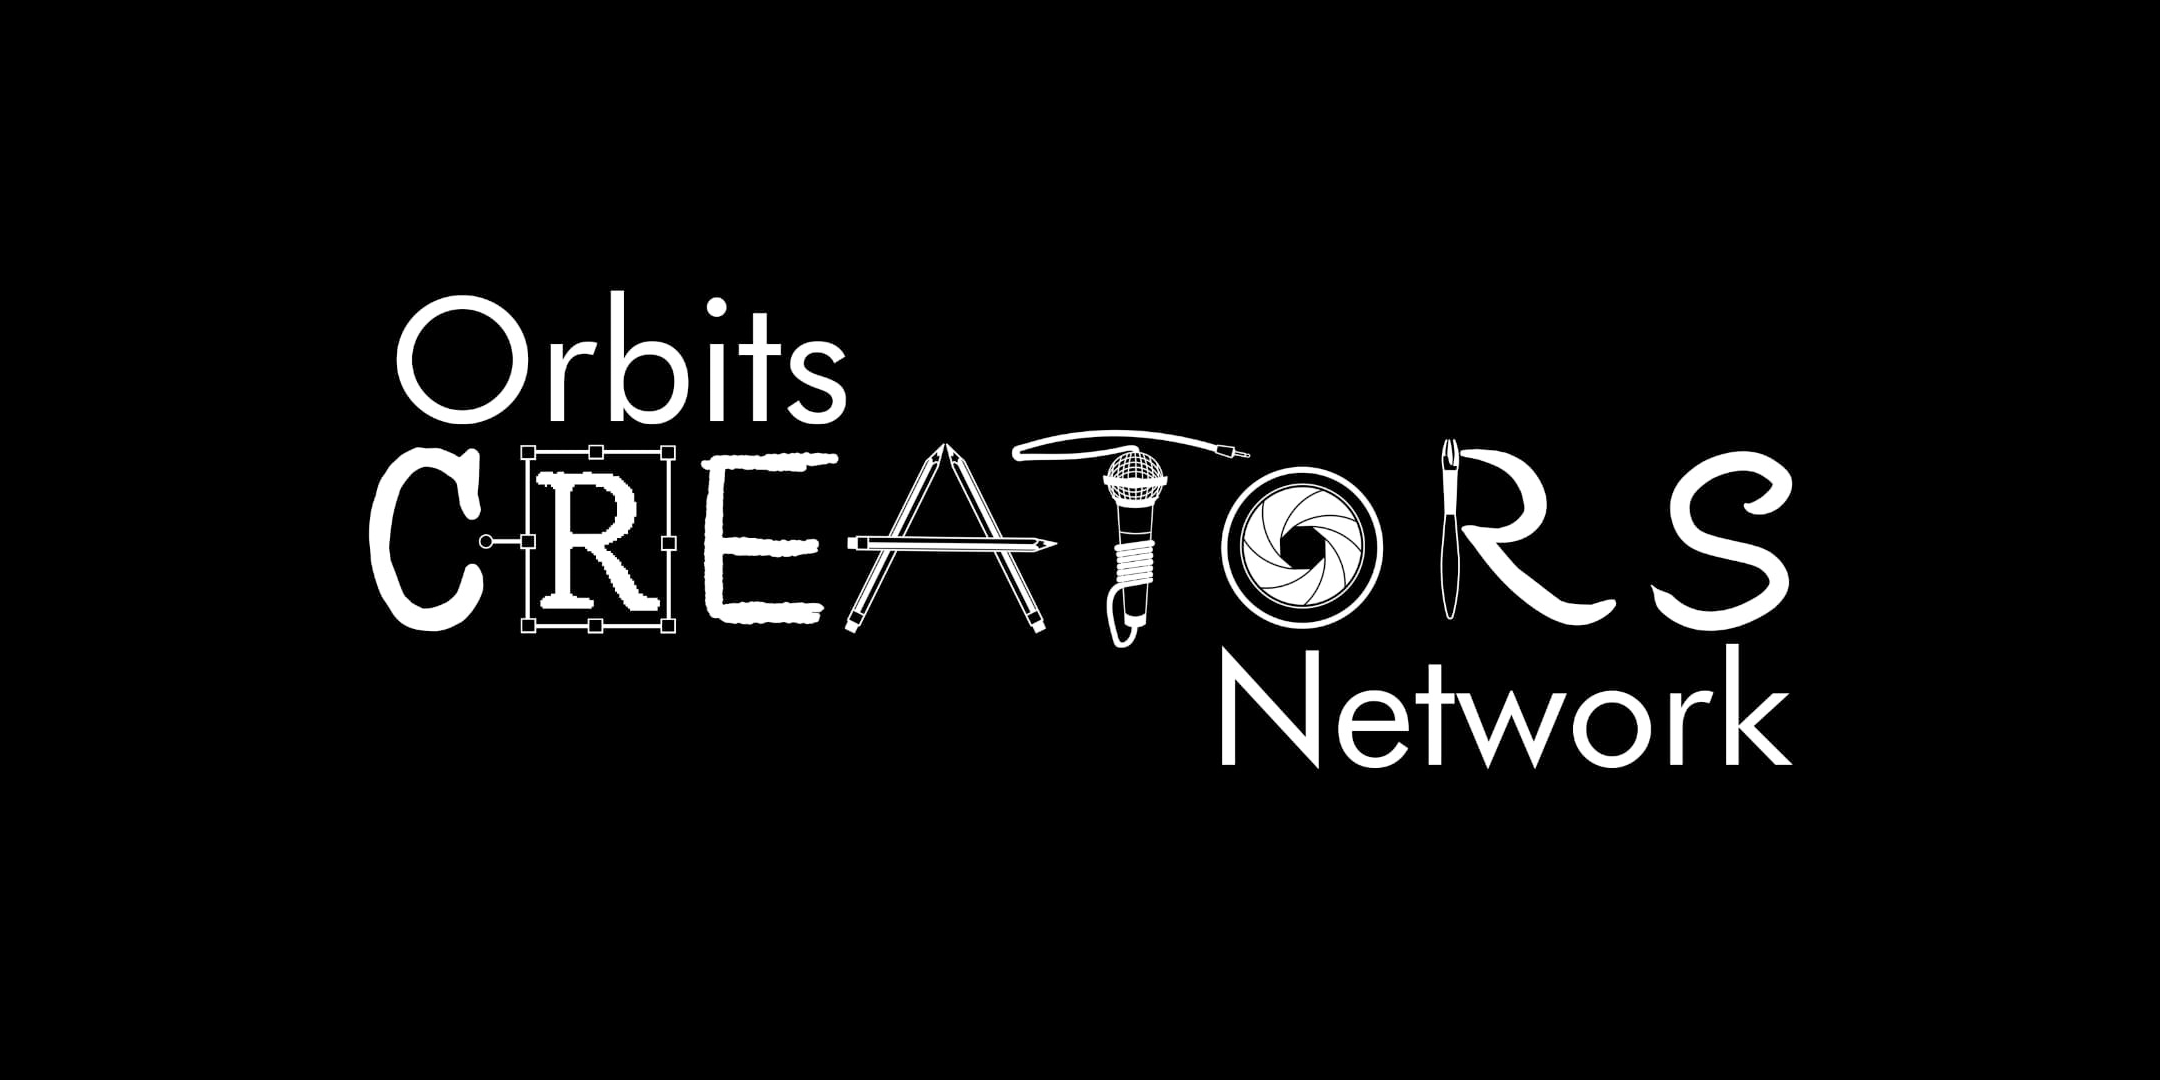 Orbit Creators Network launched